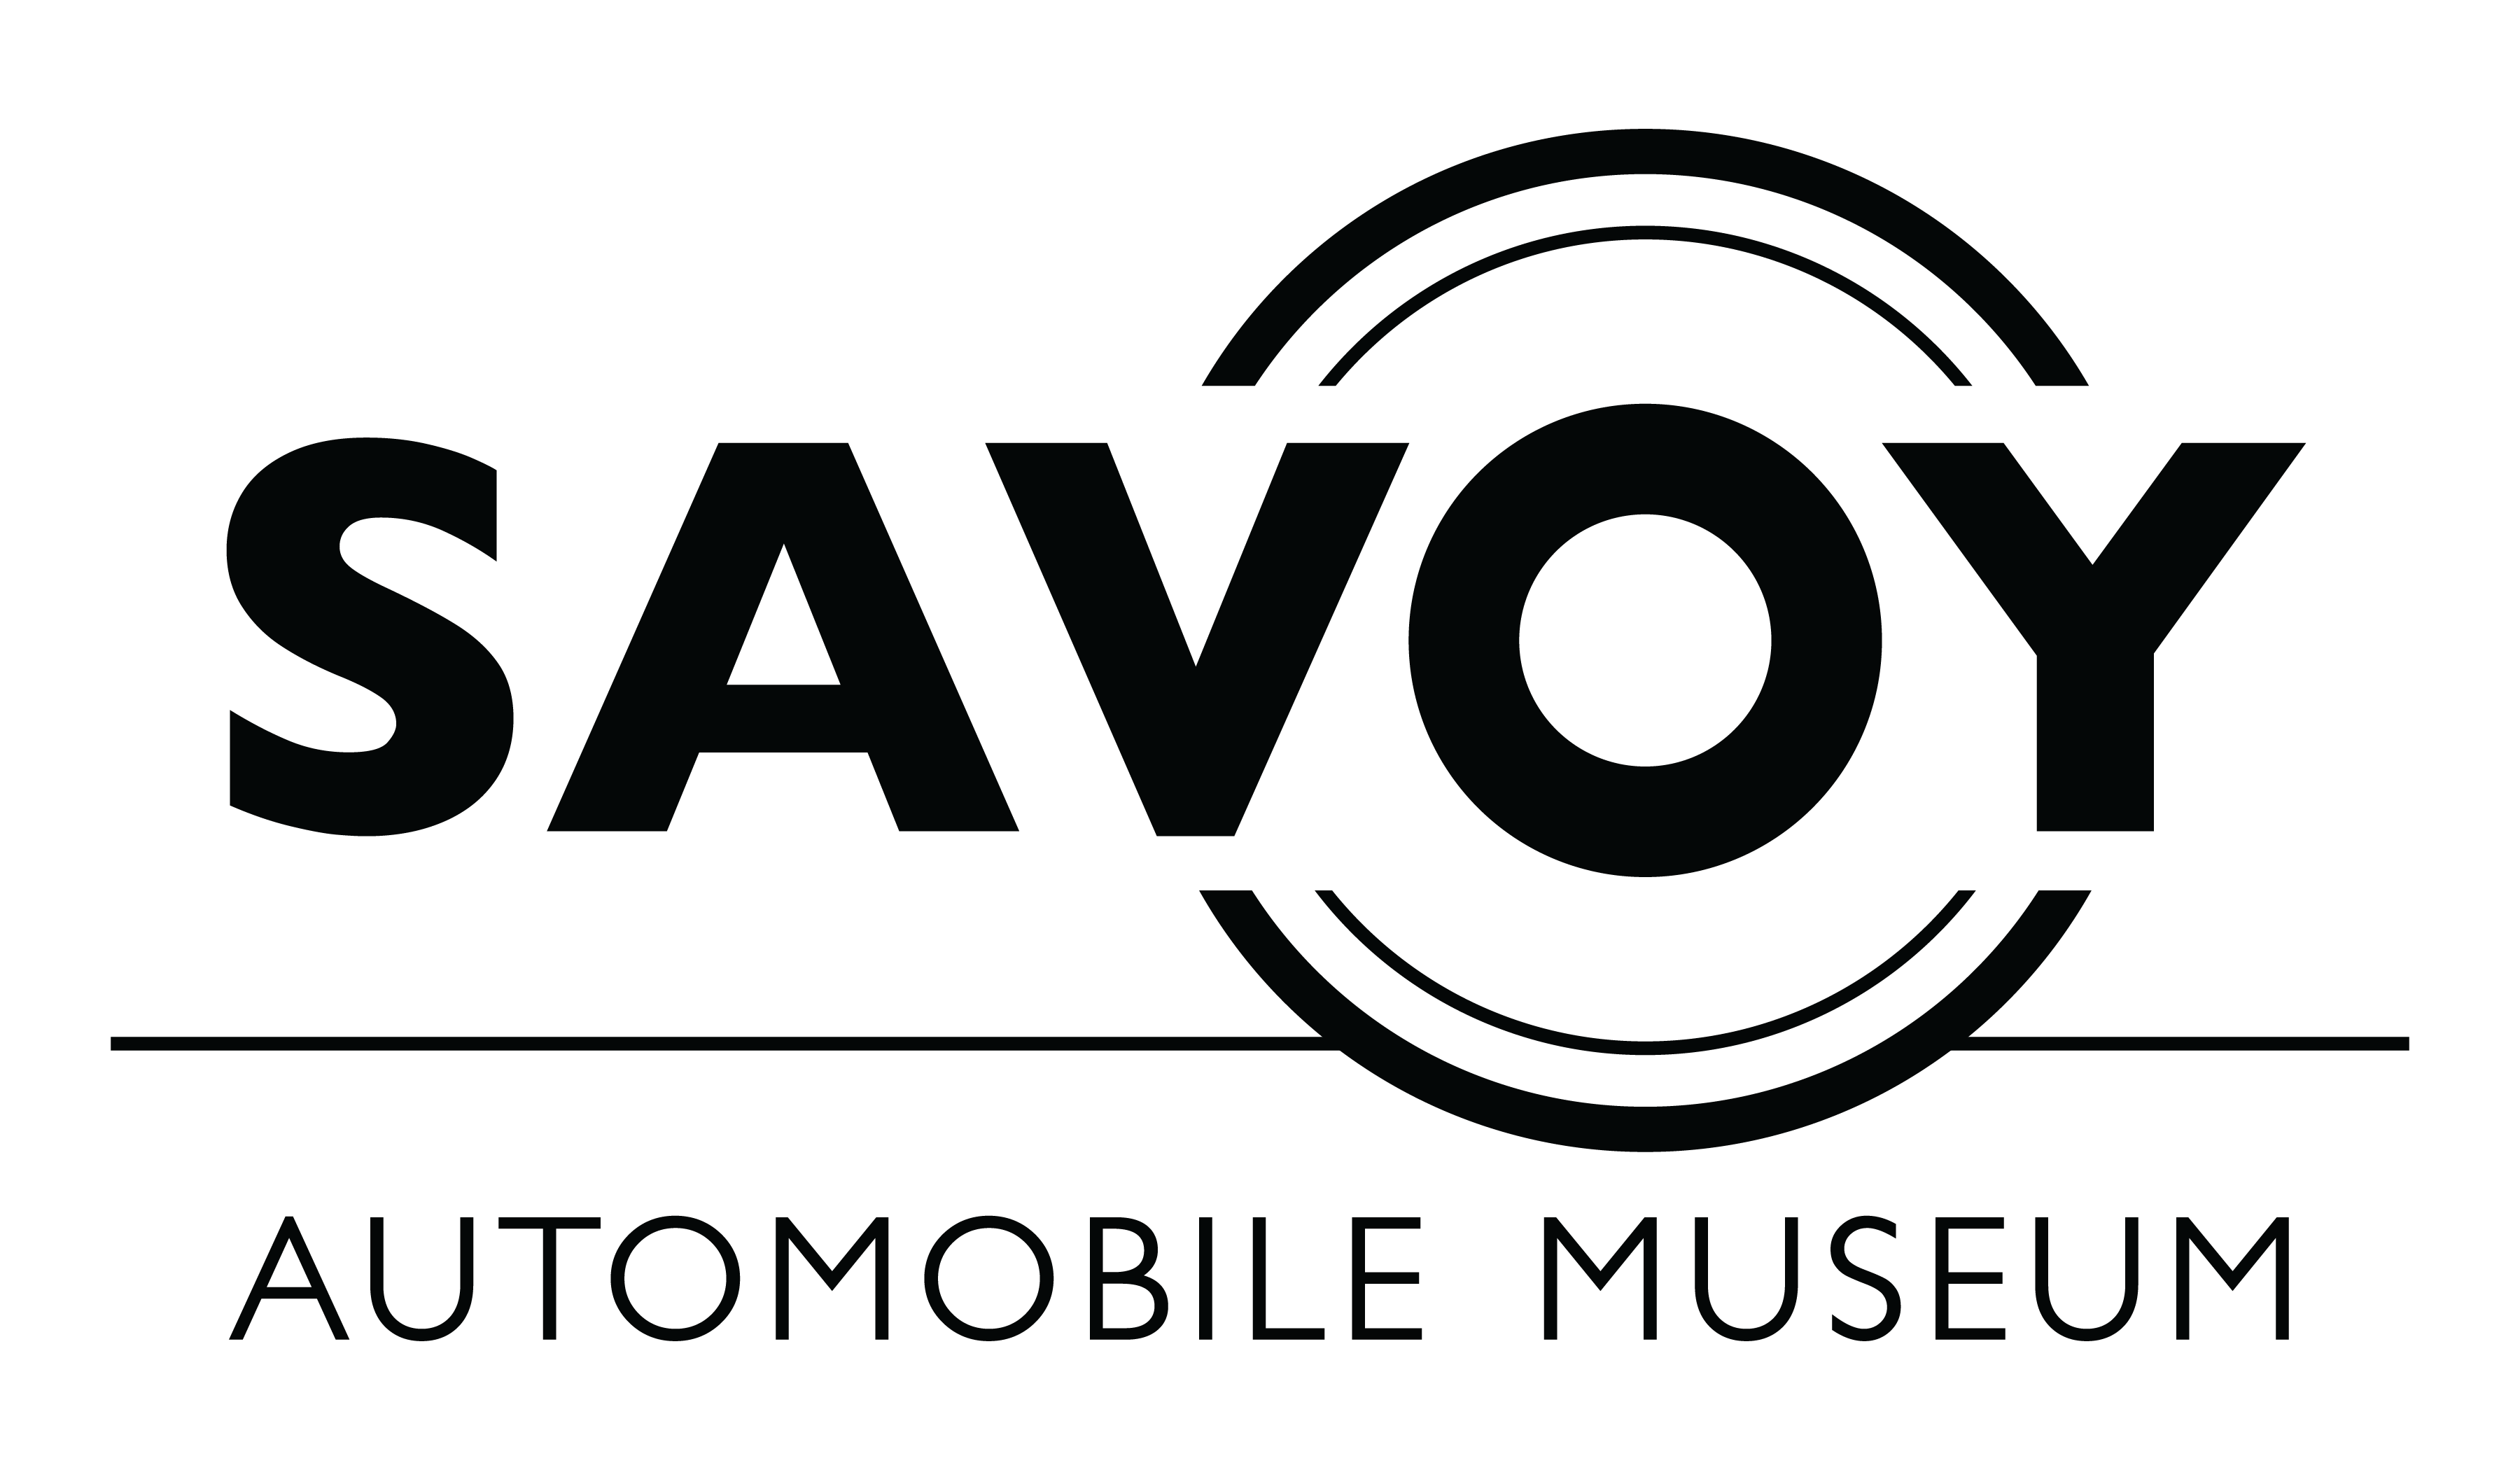 Savoy Automobile Museum logo black